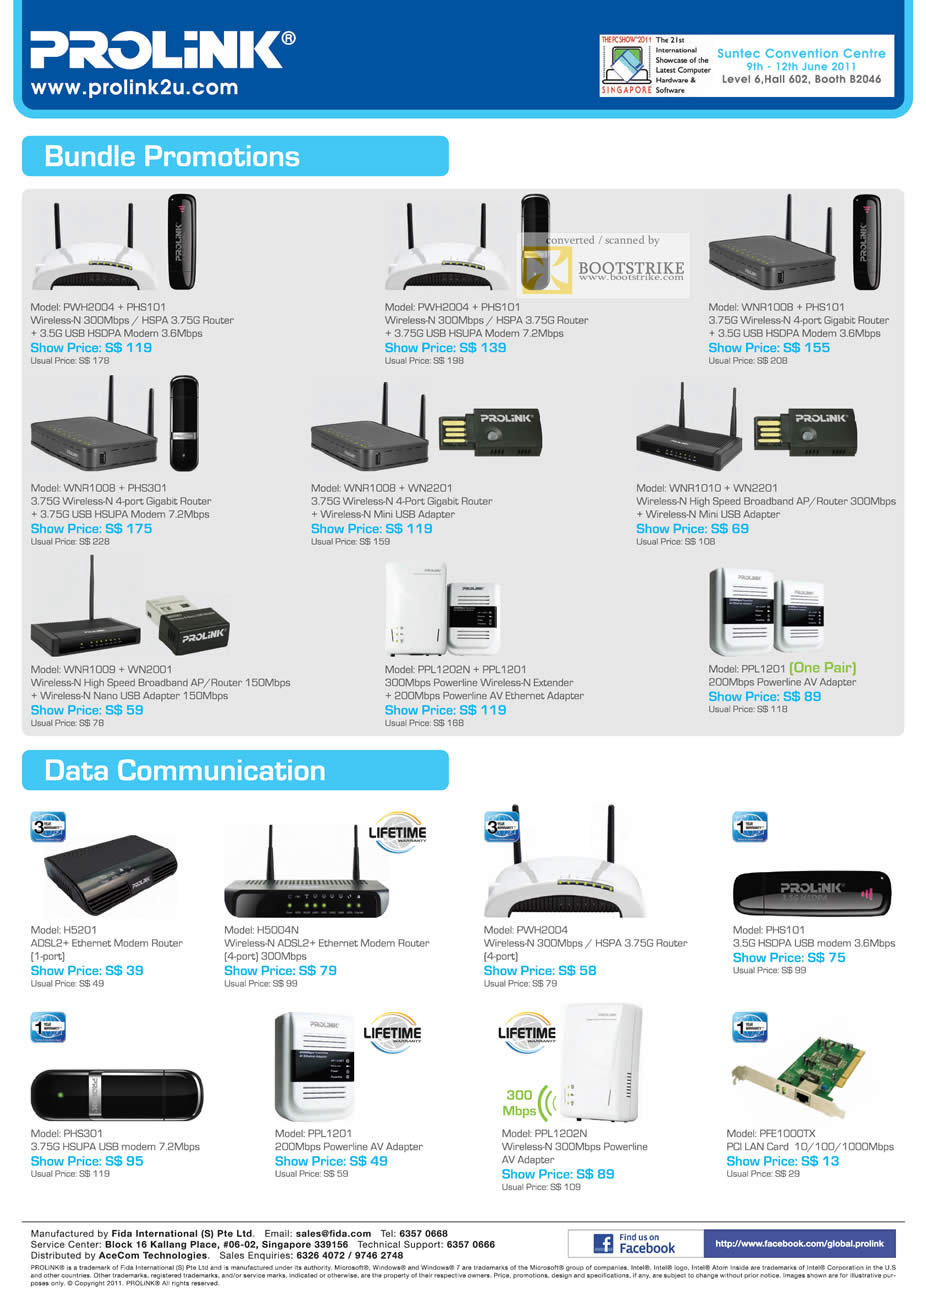 PC Show 2011 price list image brochure of Prolink Bundle Promotions Wireless Router HSUPA Modem USB Adapter Powerline ADSL PCI LAN Card